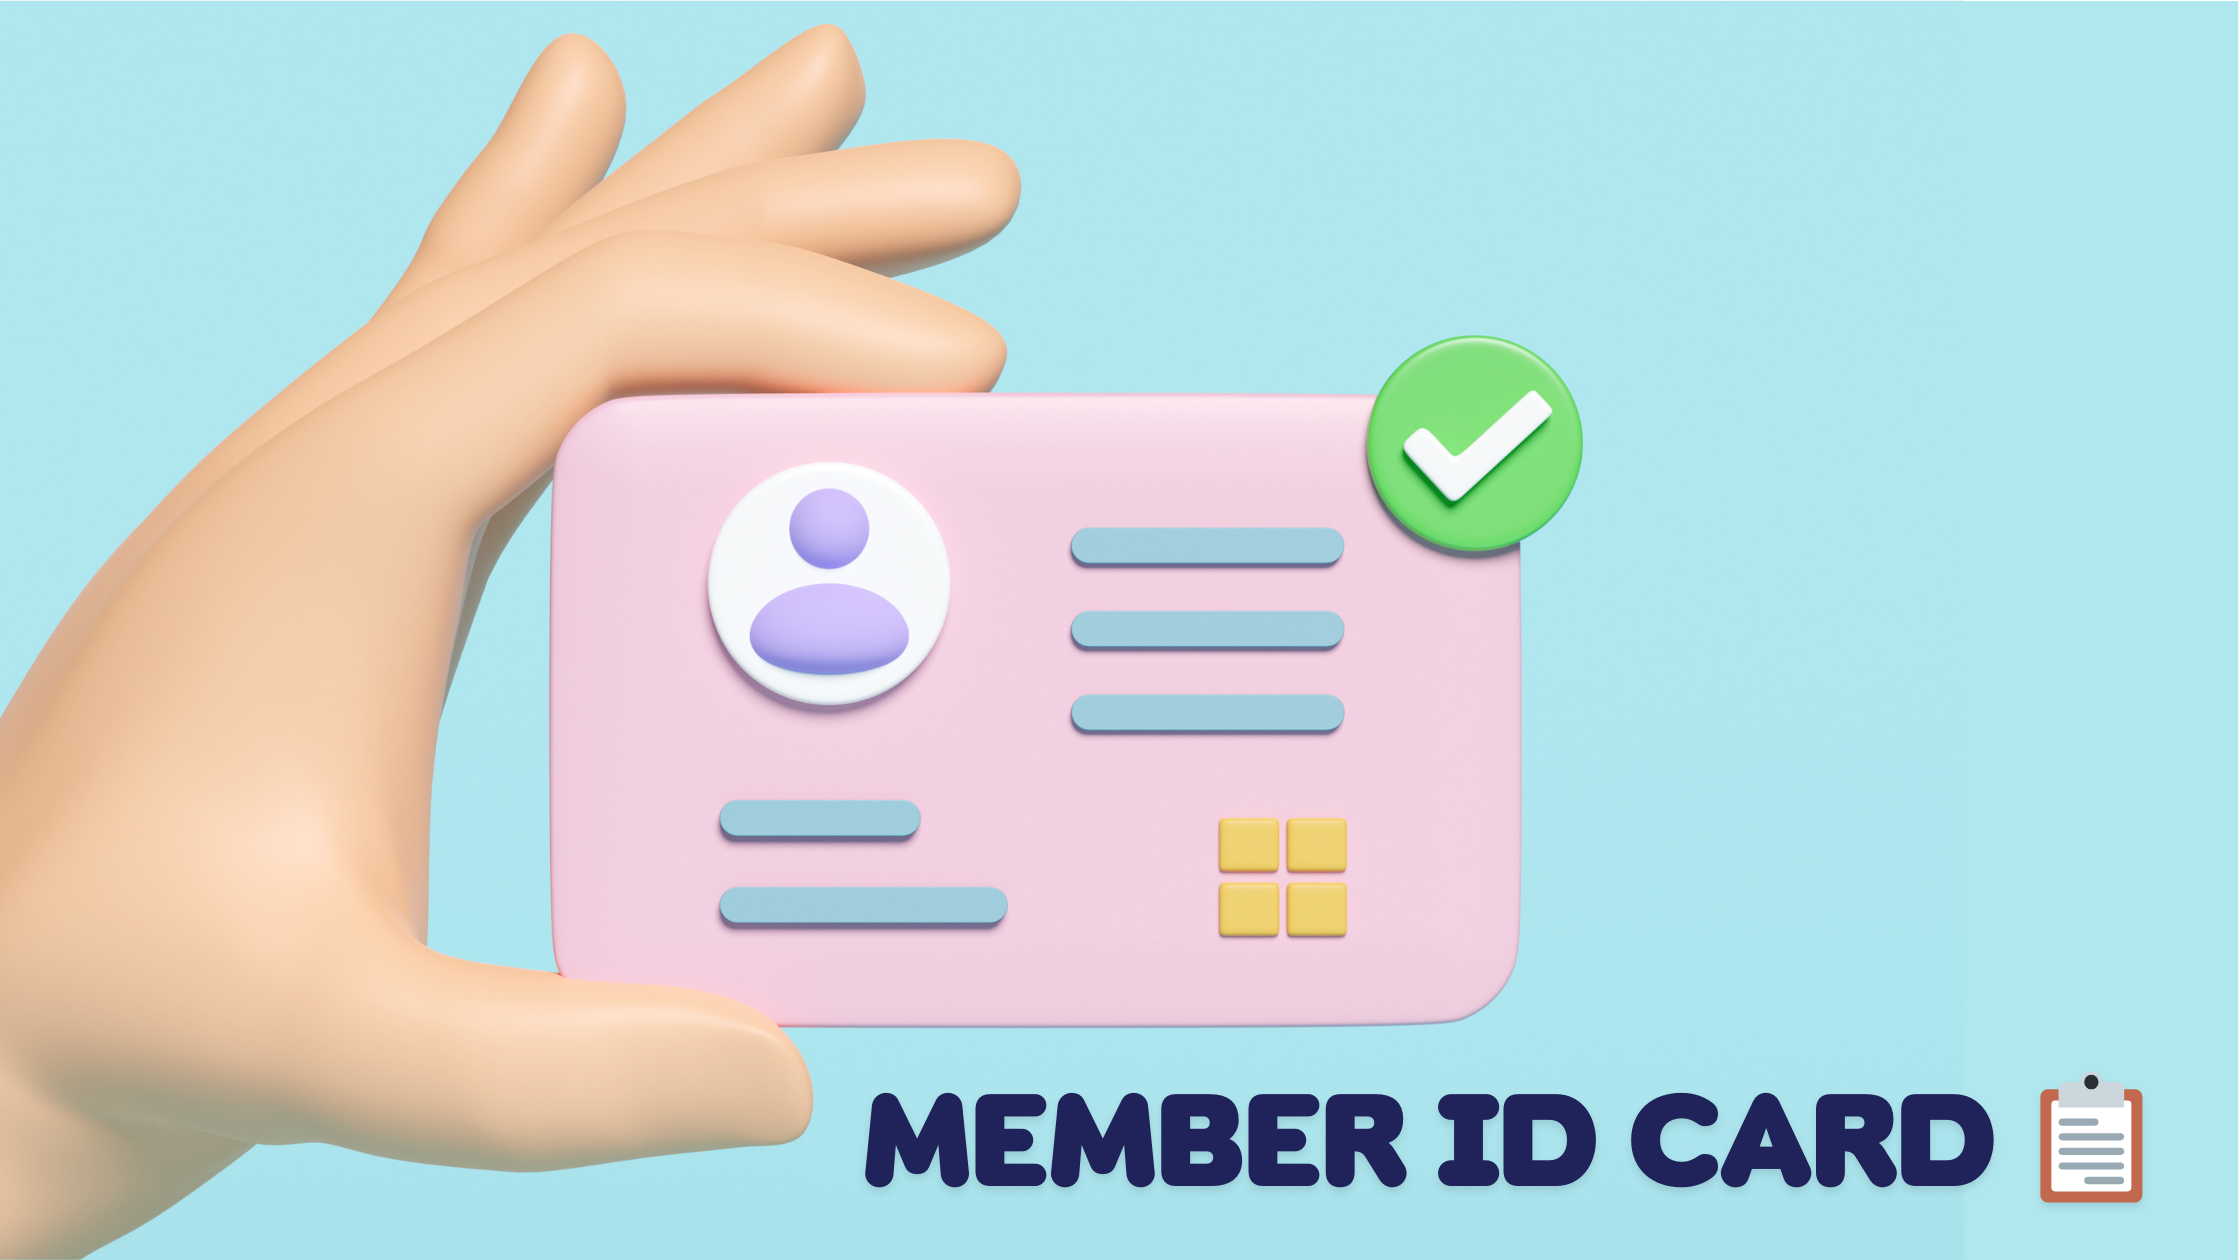 Member ID CARD